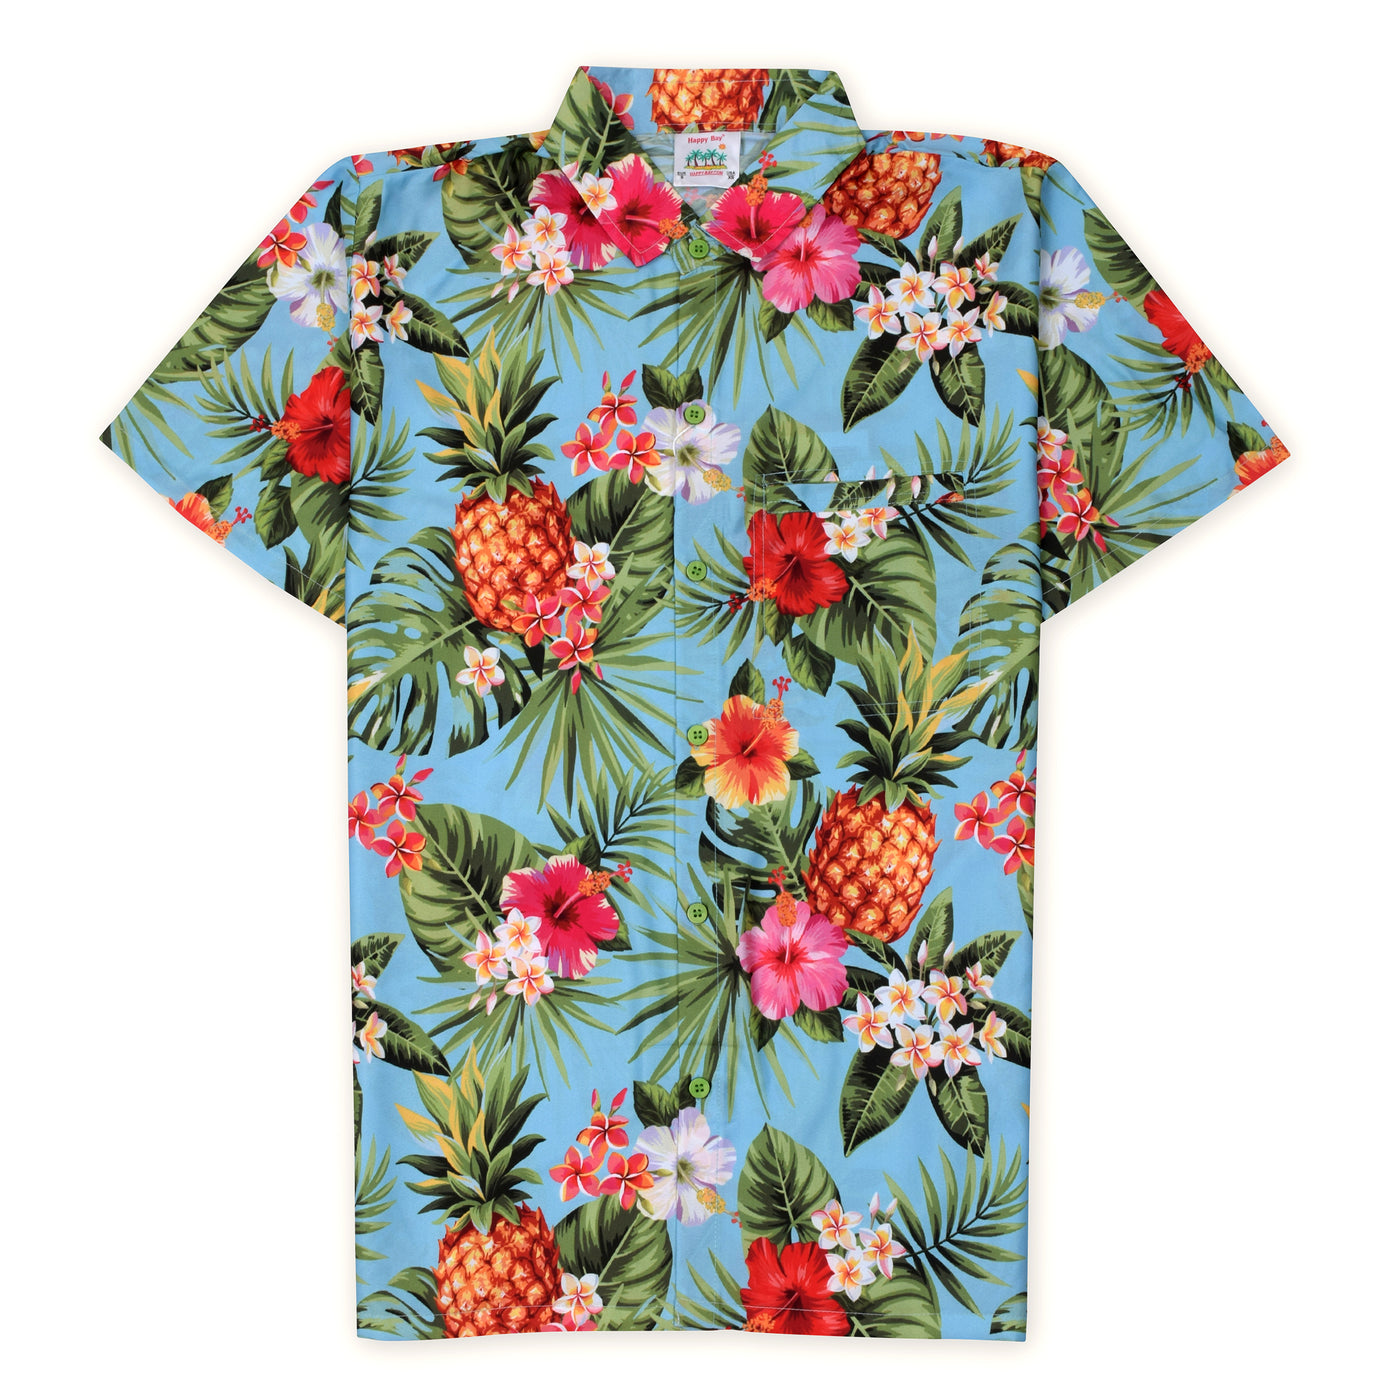 Buy now be my pina colada hawaiian shirt